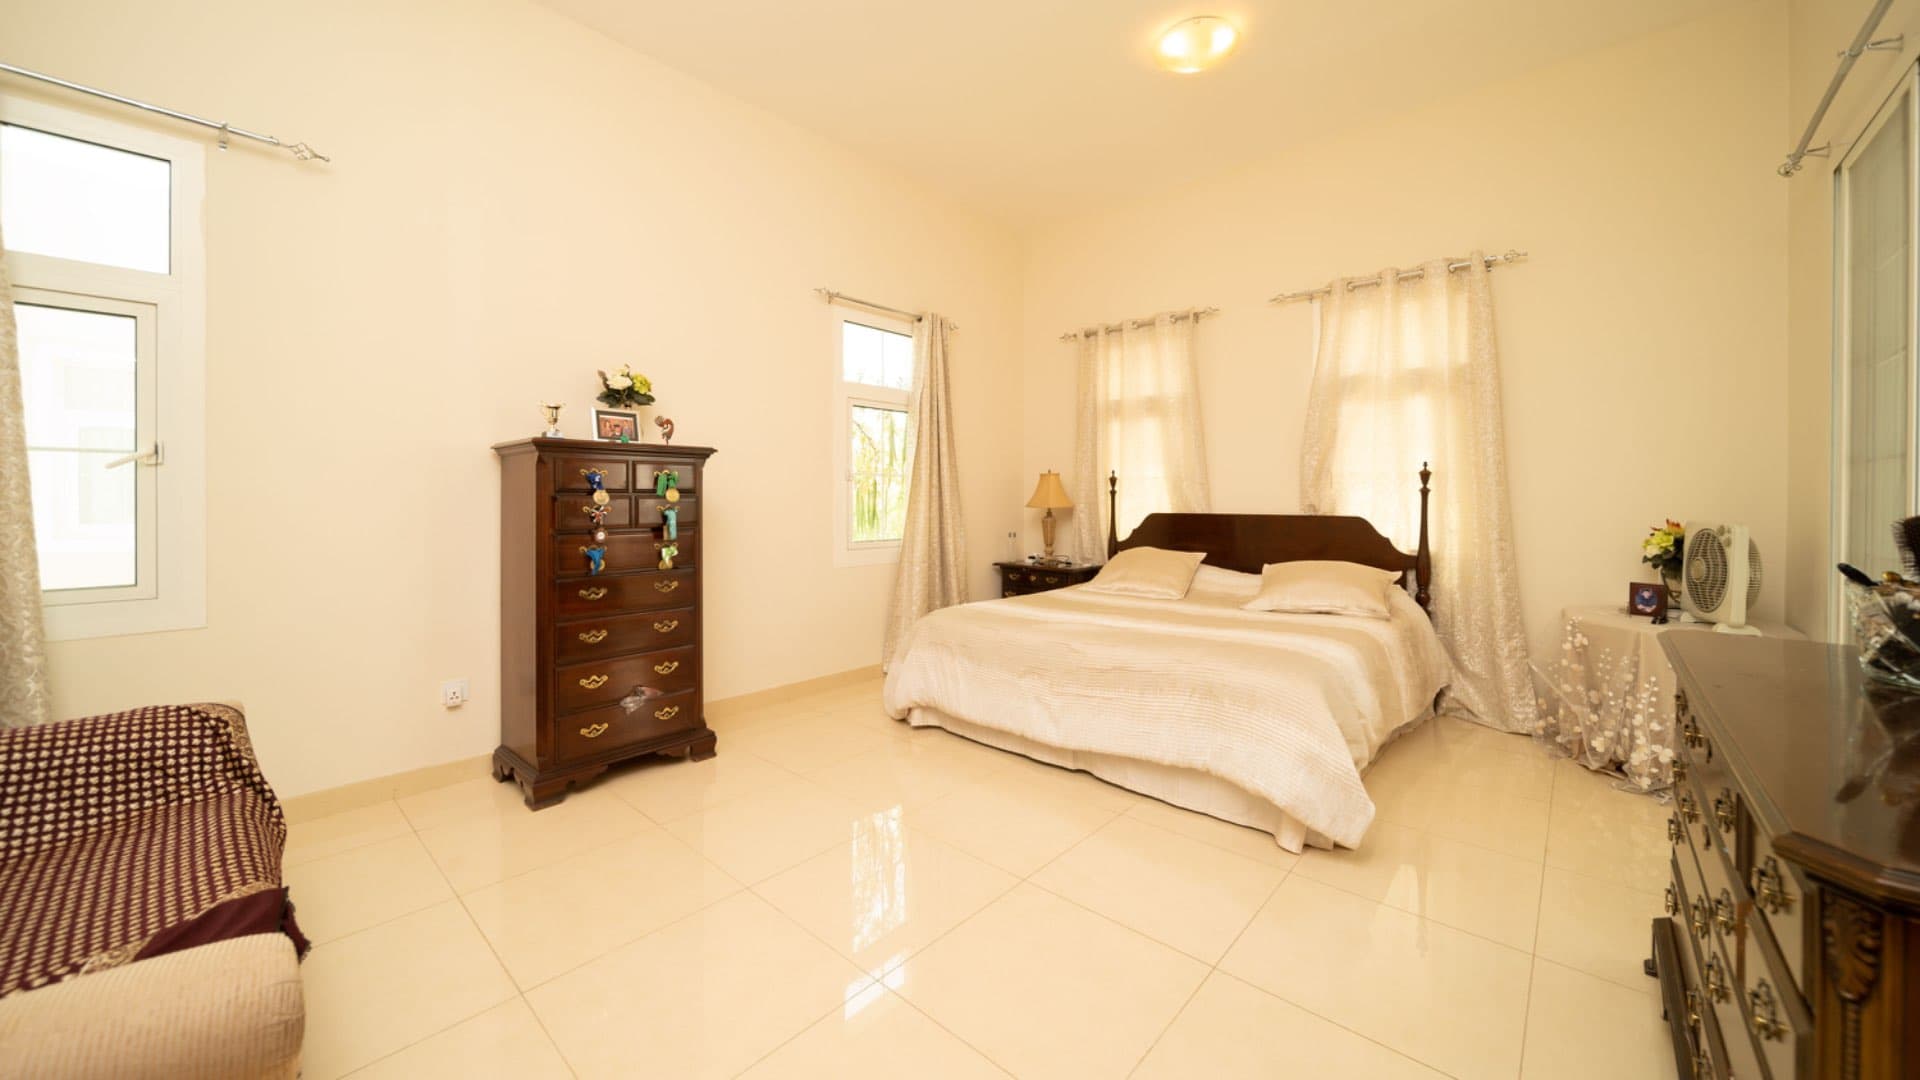 3 Bedroom Villa For Sale Rahat Lp11867 180dc60c04799500.jpeg